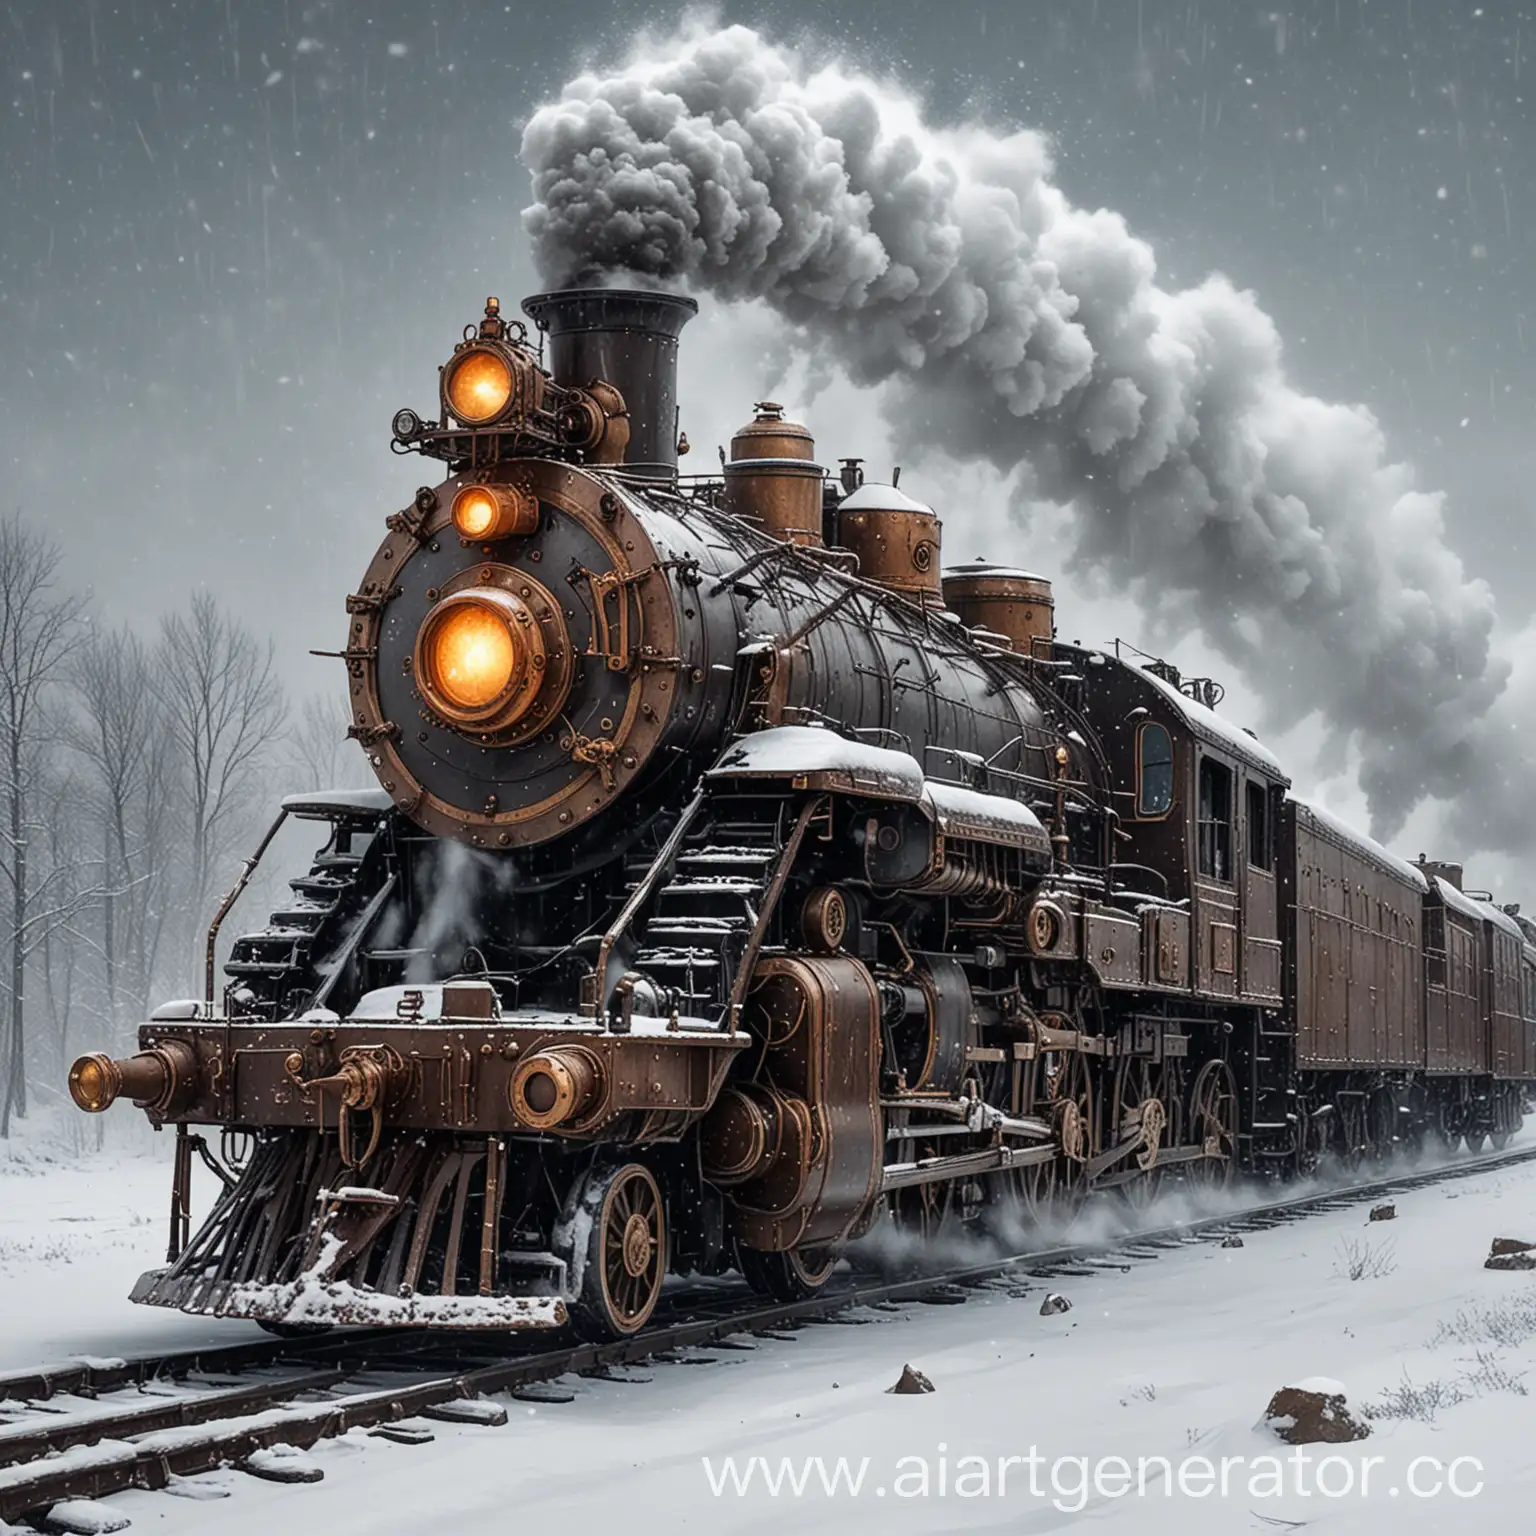 Steampunk-Locomotive-Racing-Through-Snowy-Blizzard